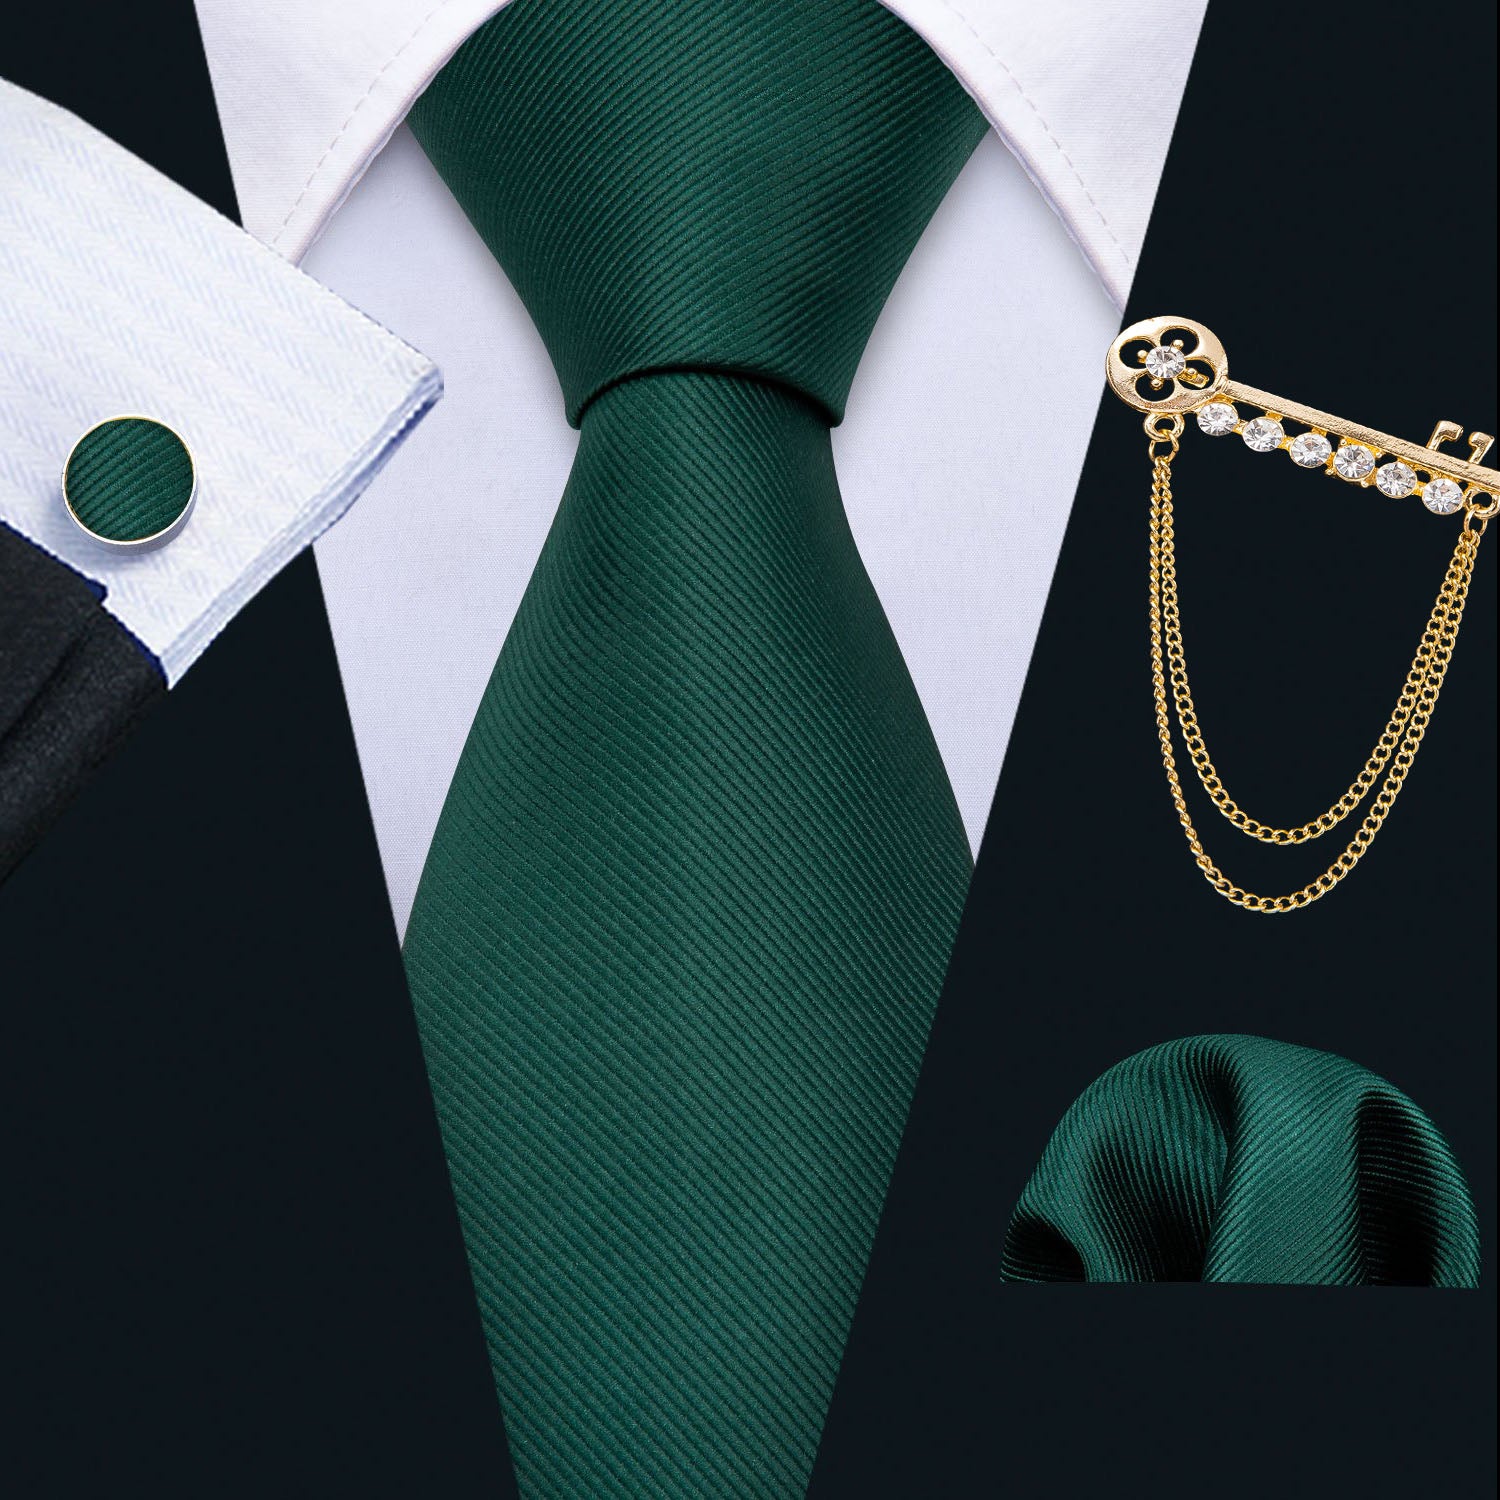 Green Solid Men's Tie Lapel Pin Brooch Silk Tie Pocket Square Cufflinks Set  Wedding Business Party